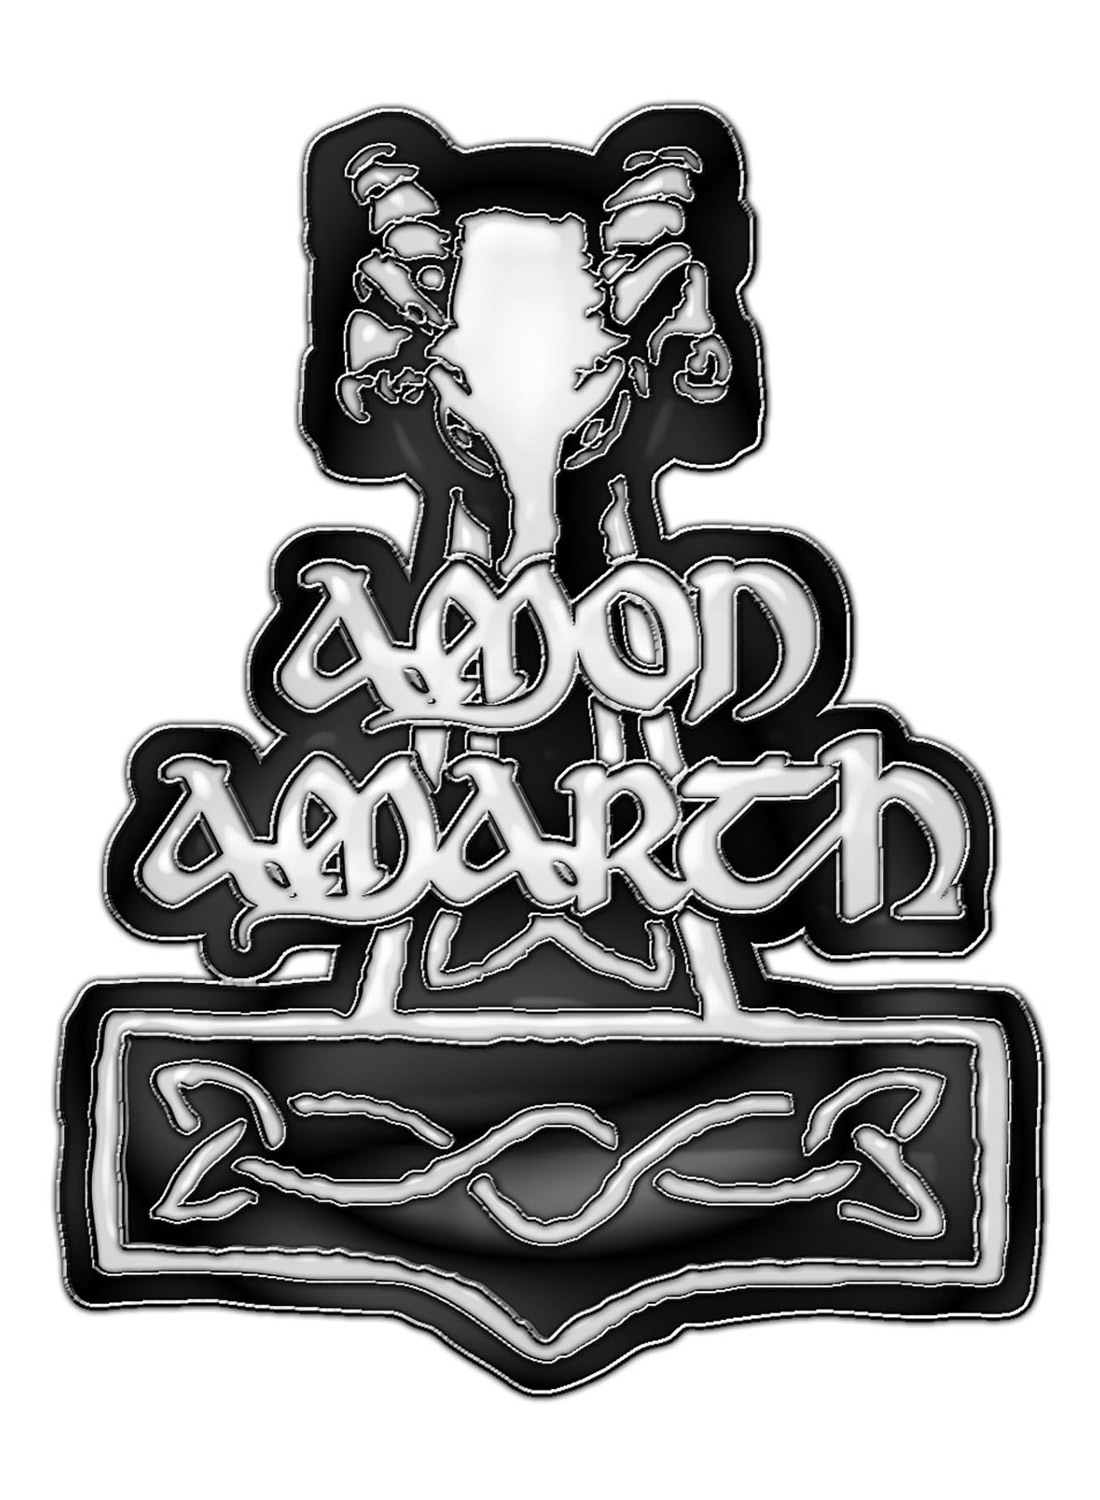 Amon Amrath Metal Pin Badge